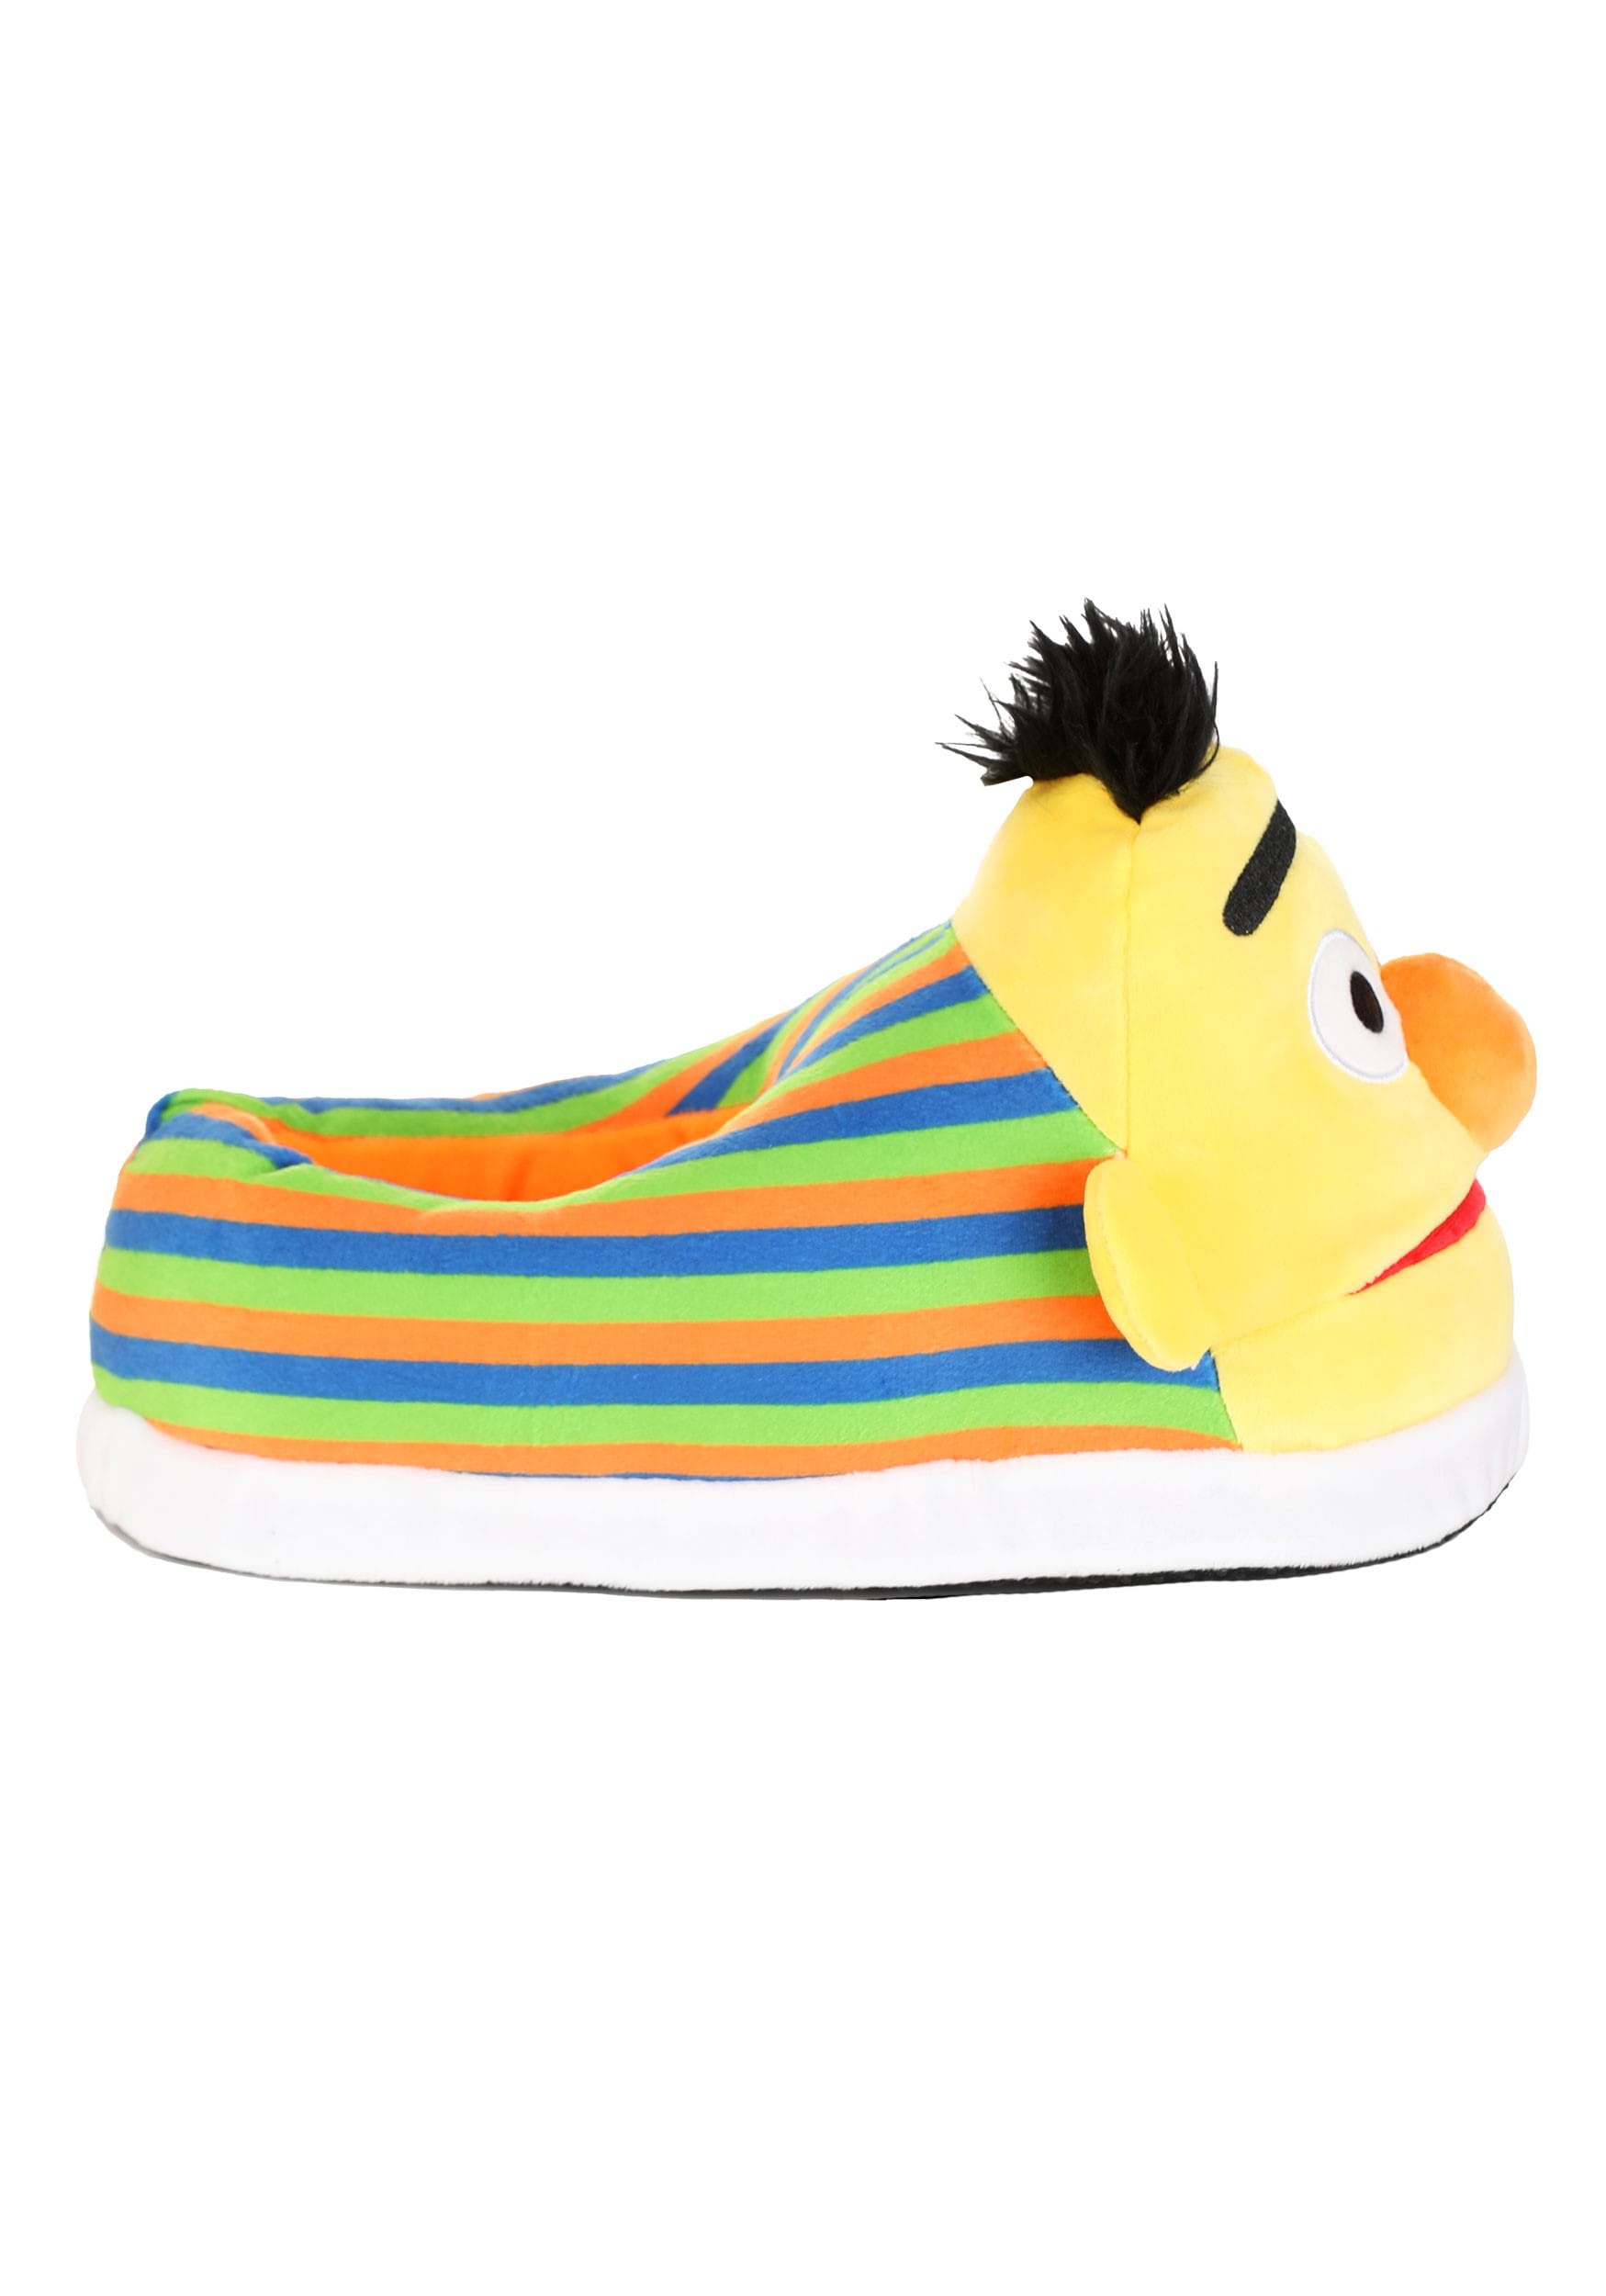 Bert & Ernie Plush Slippers Adults | Sesame Street Gifts